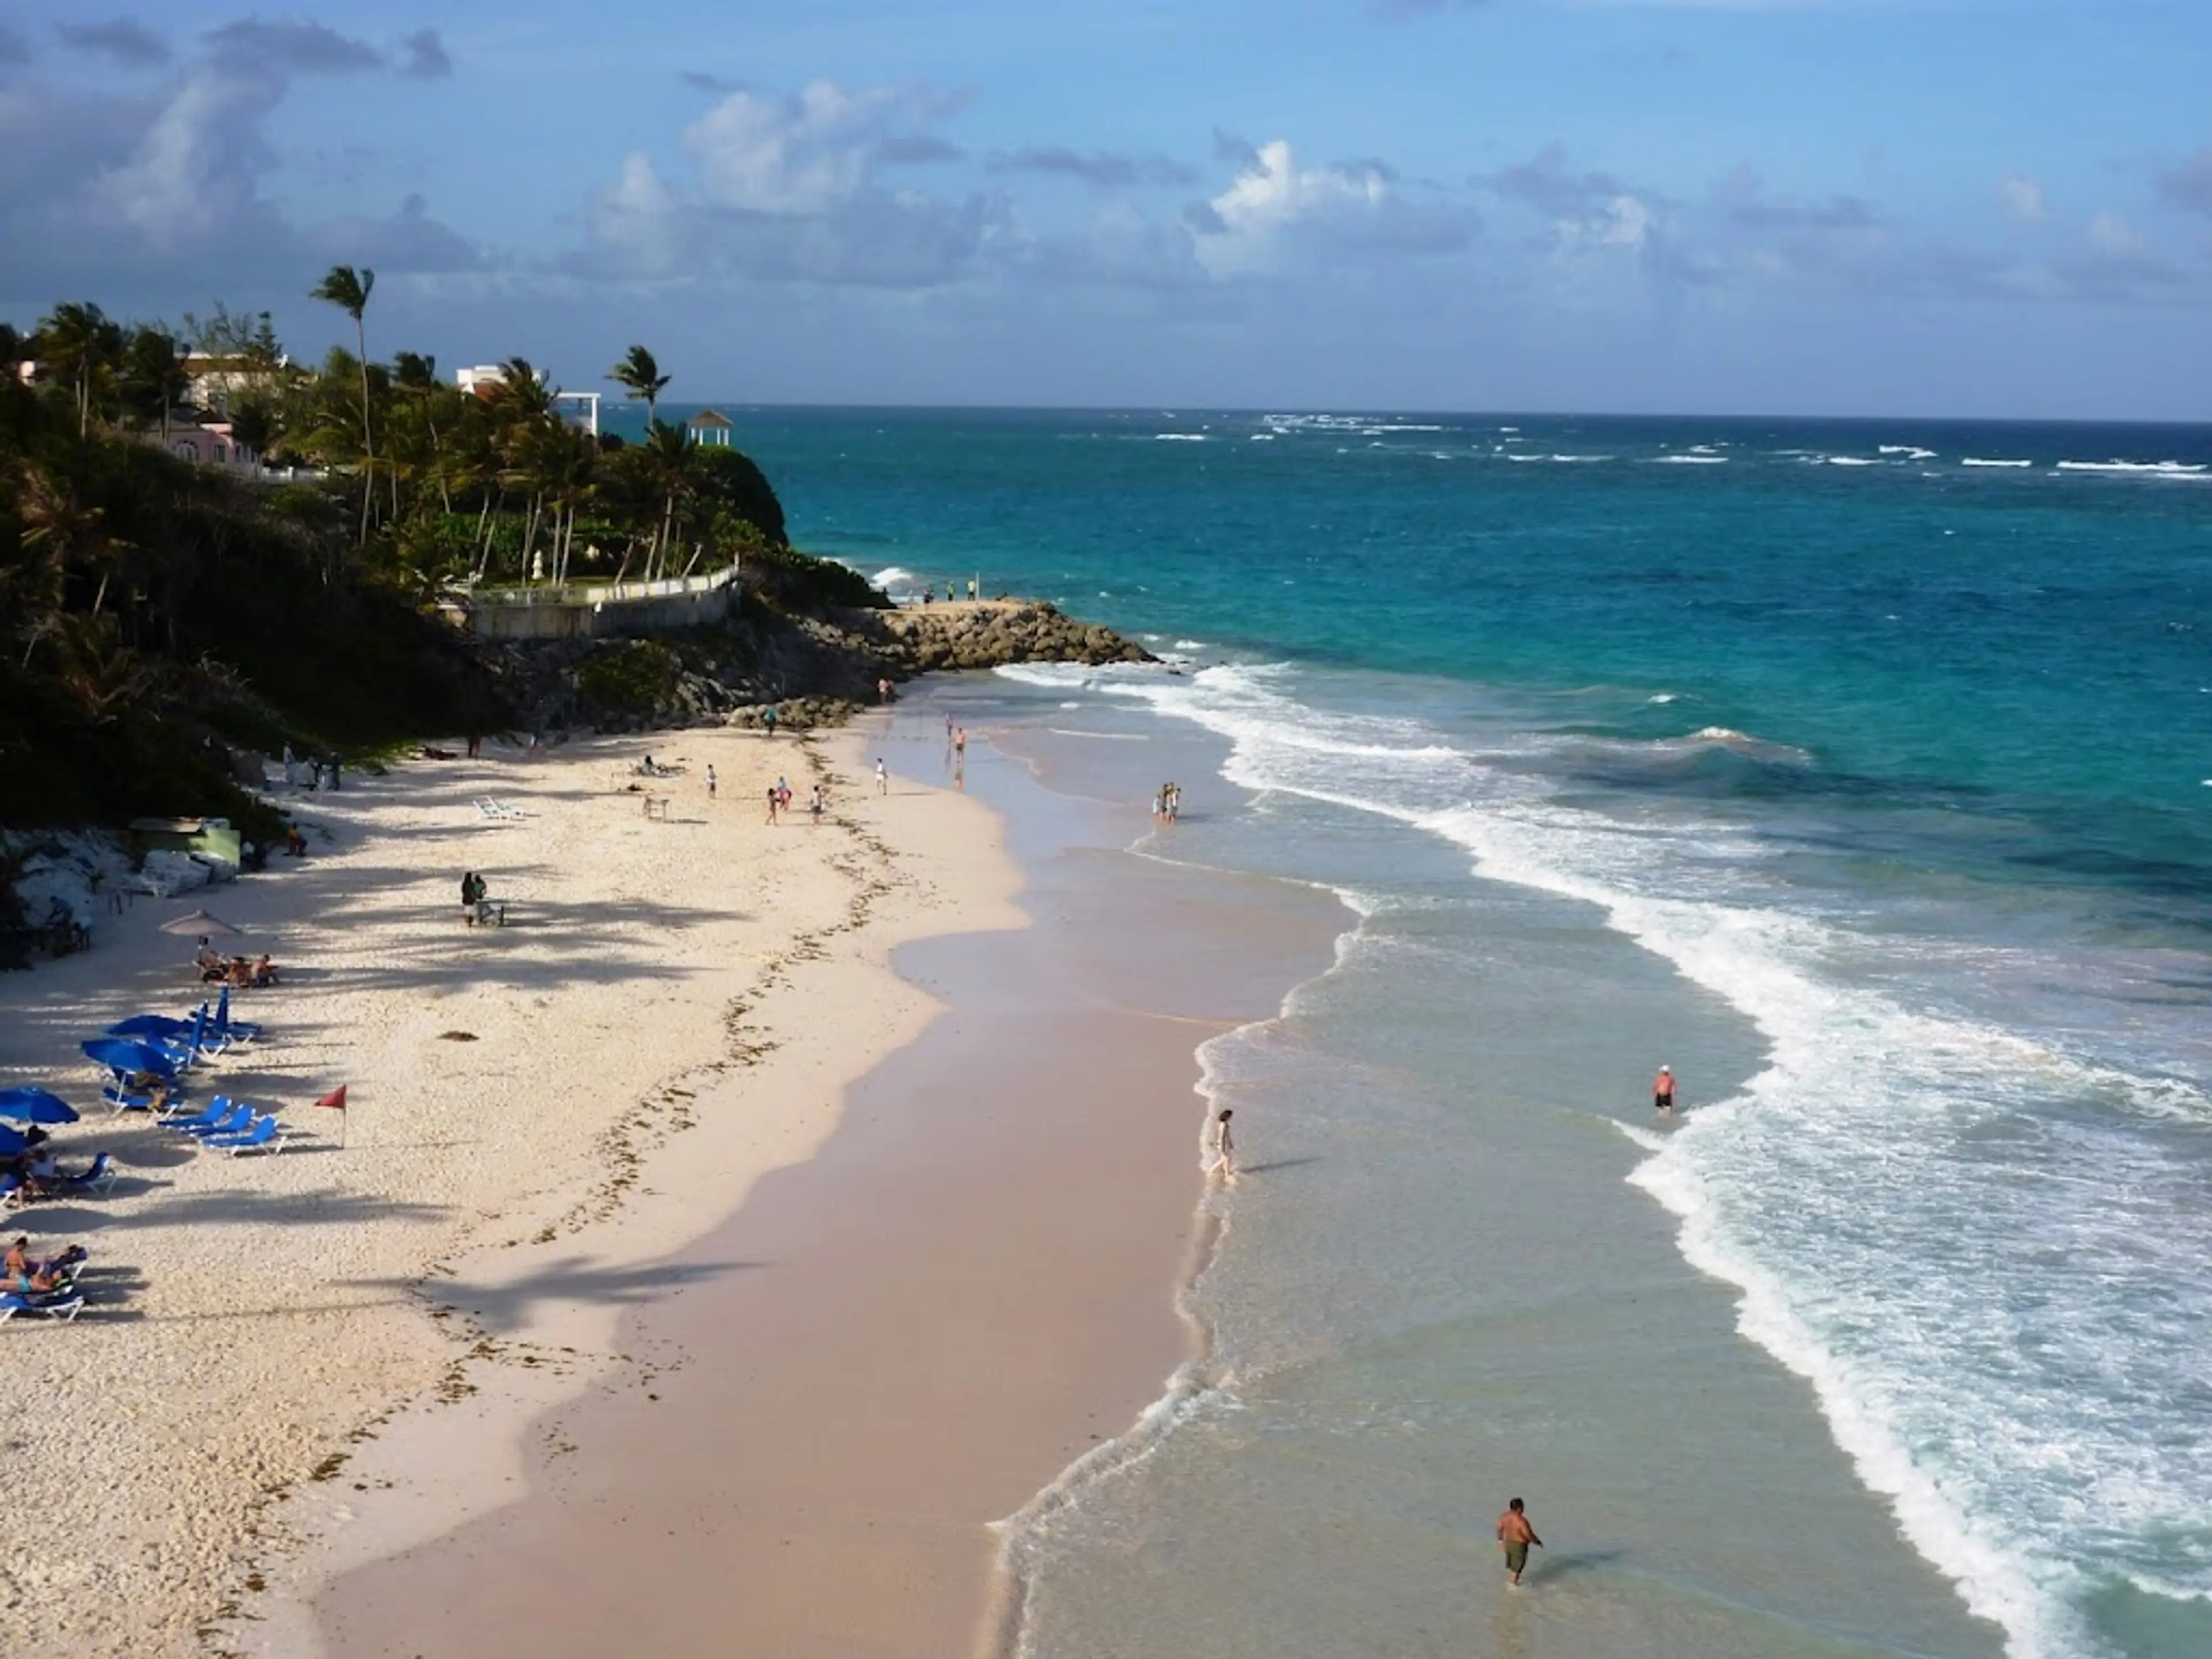 Barbados' beautiful beaches